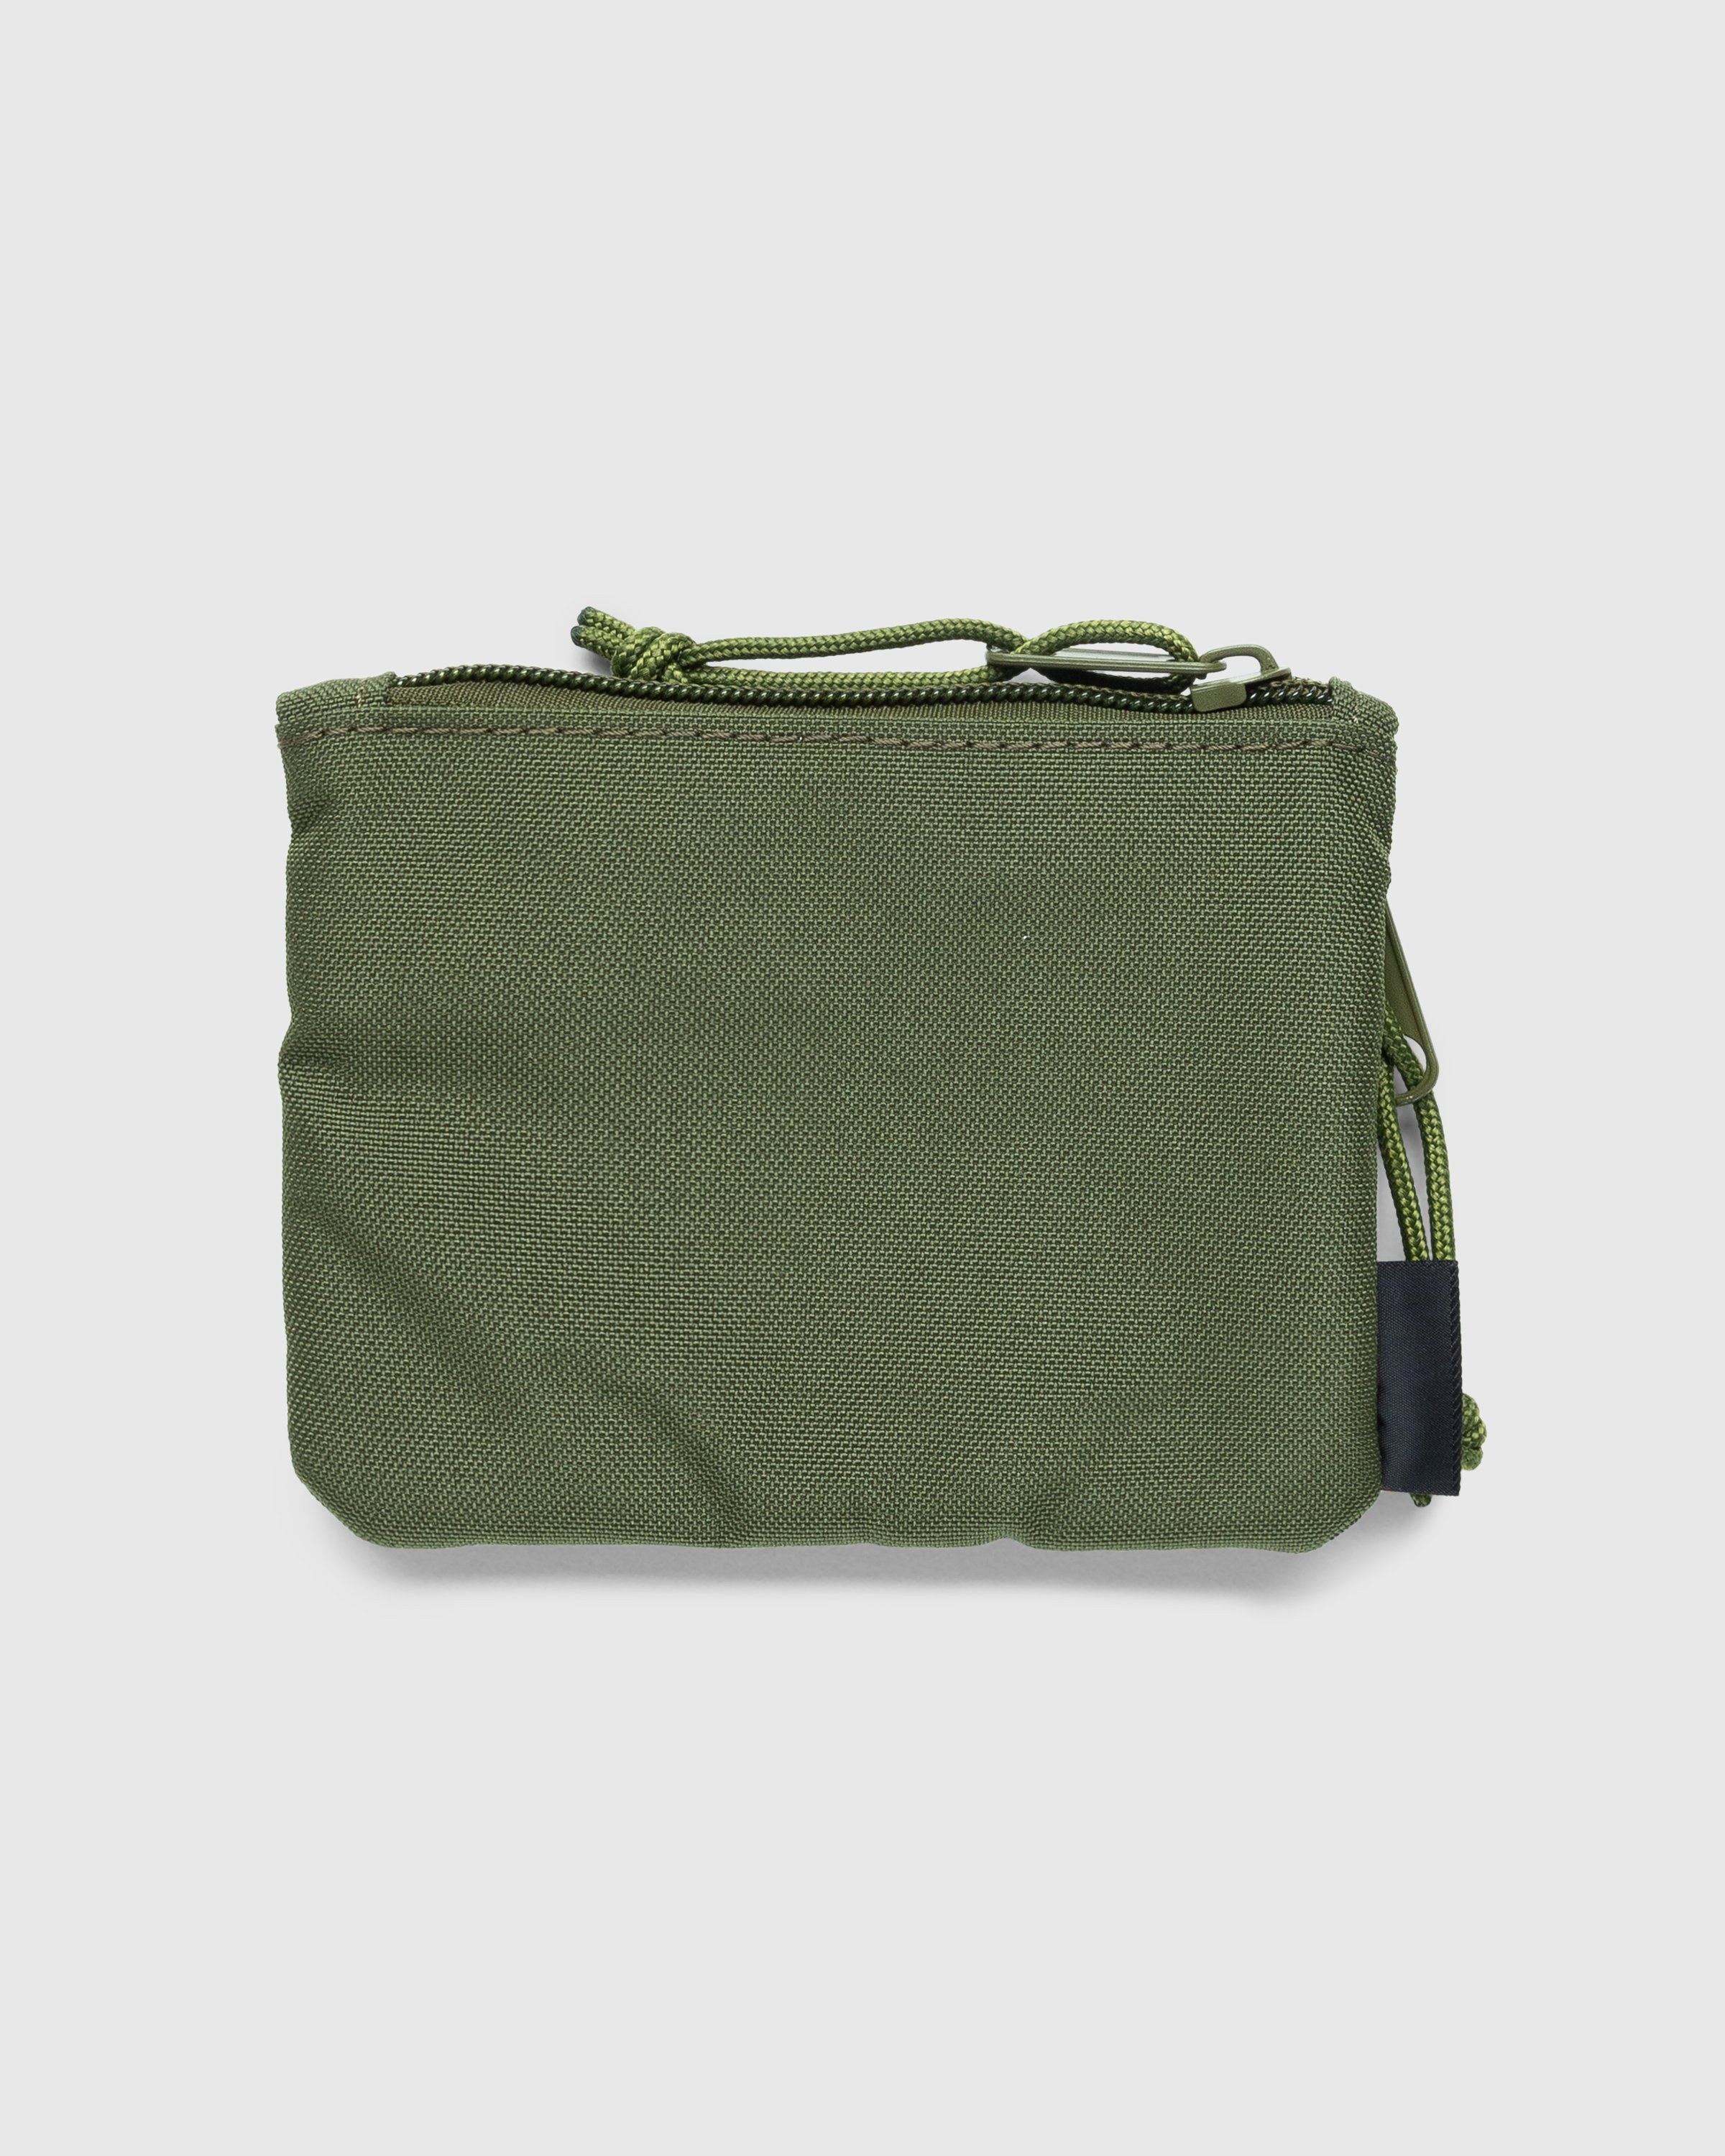 Gramicci - Cordura Wallet Olive Drab - Accessories - Green - Image 2